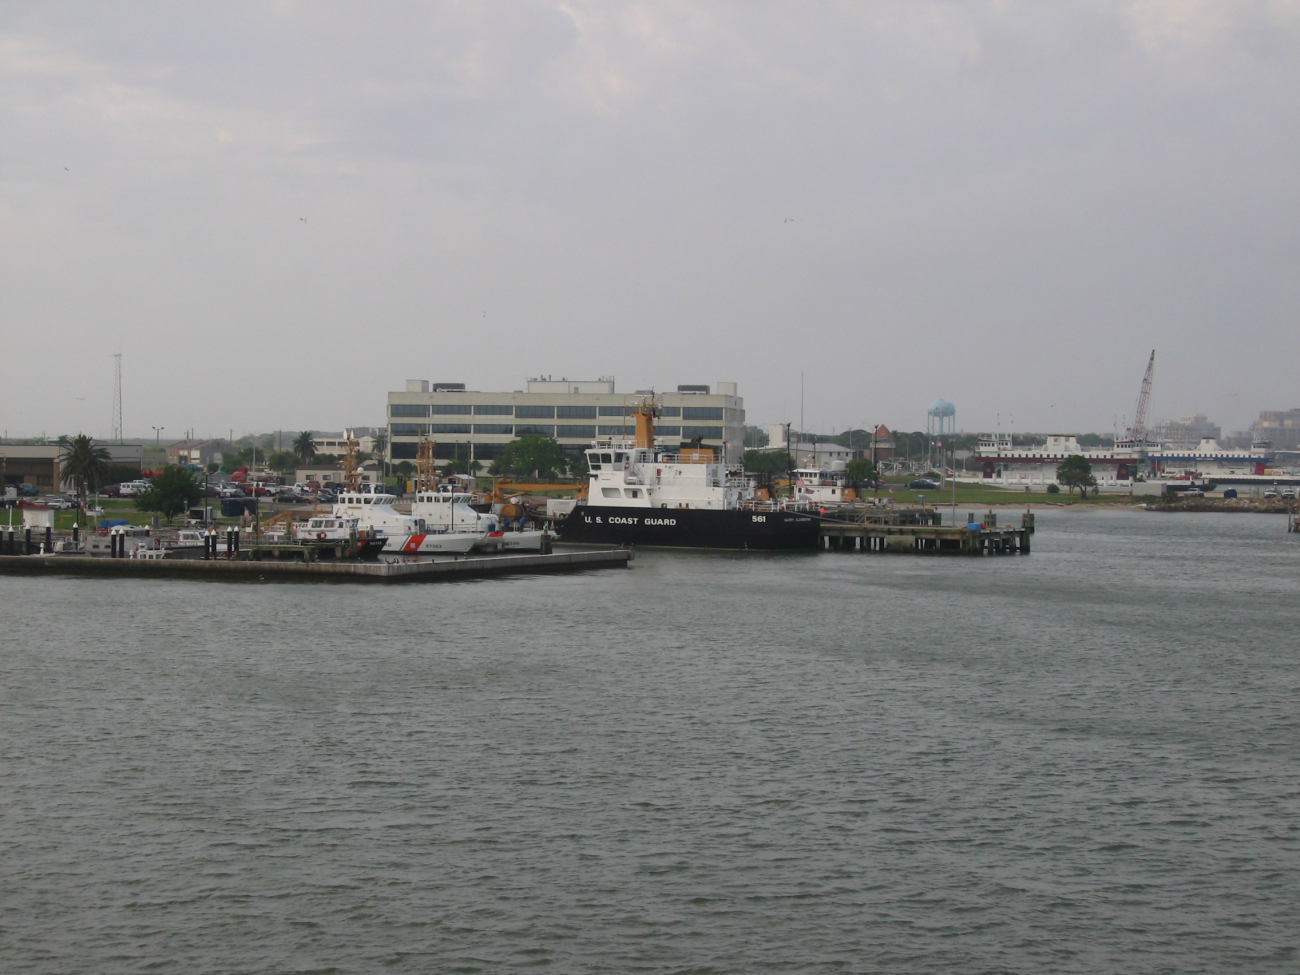 The United States Coast Guard base at Galveston